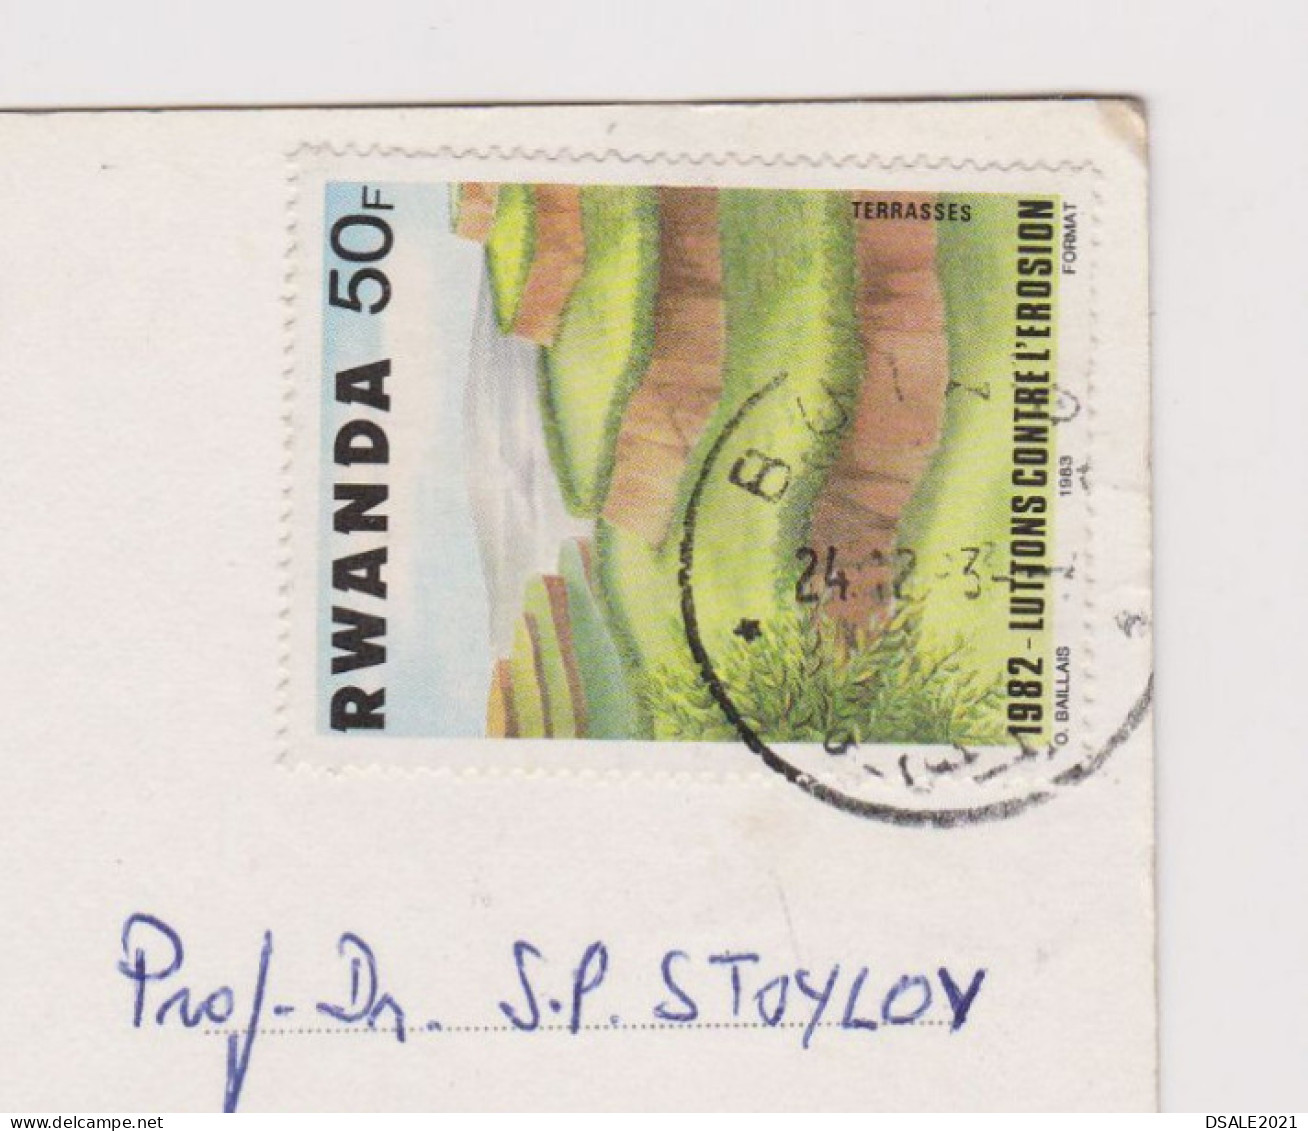 RWANDA Karisimbi Volcano View, Vintage 1980s Photo Postcard With 50F Topic Stamp Sent Abroad To Bulgaria (567) - Lettres & Documents